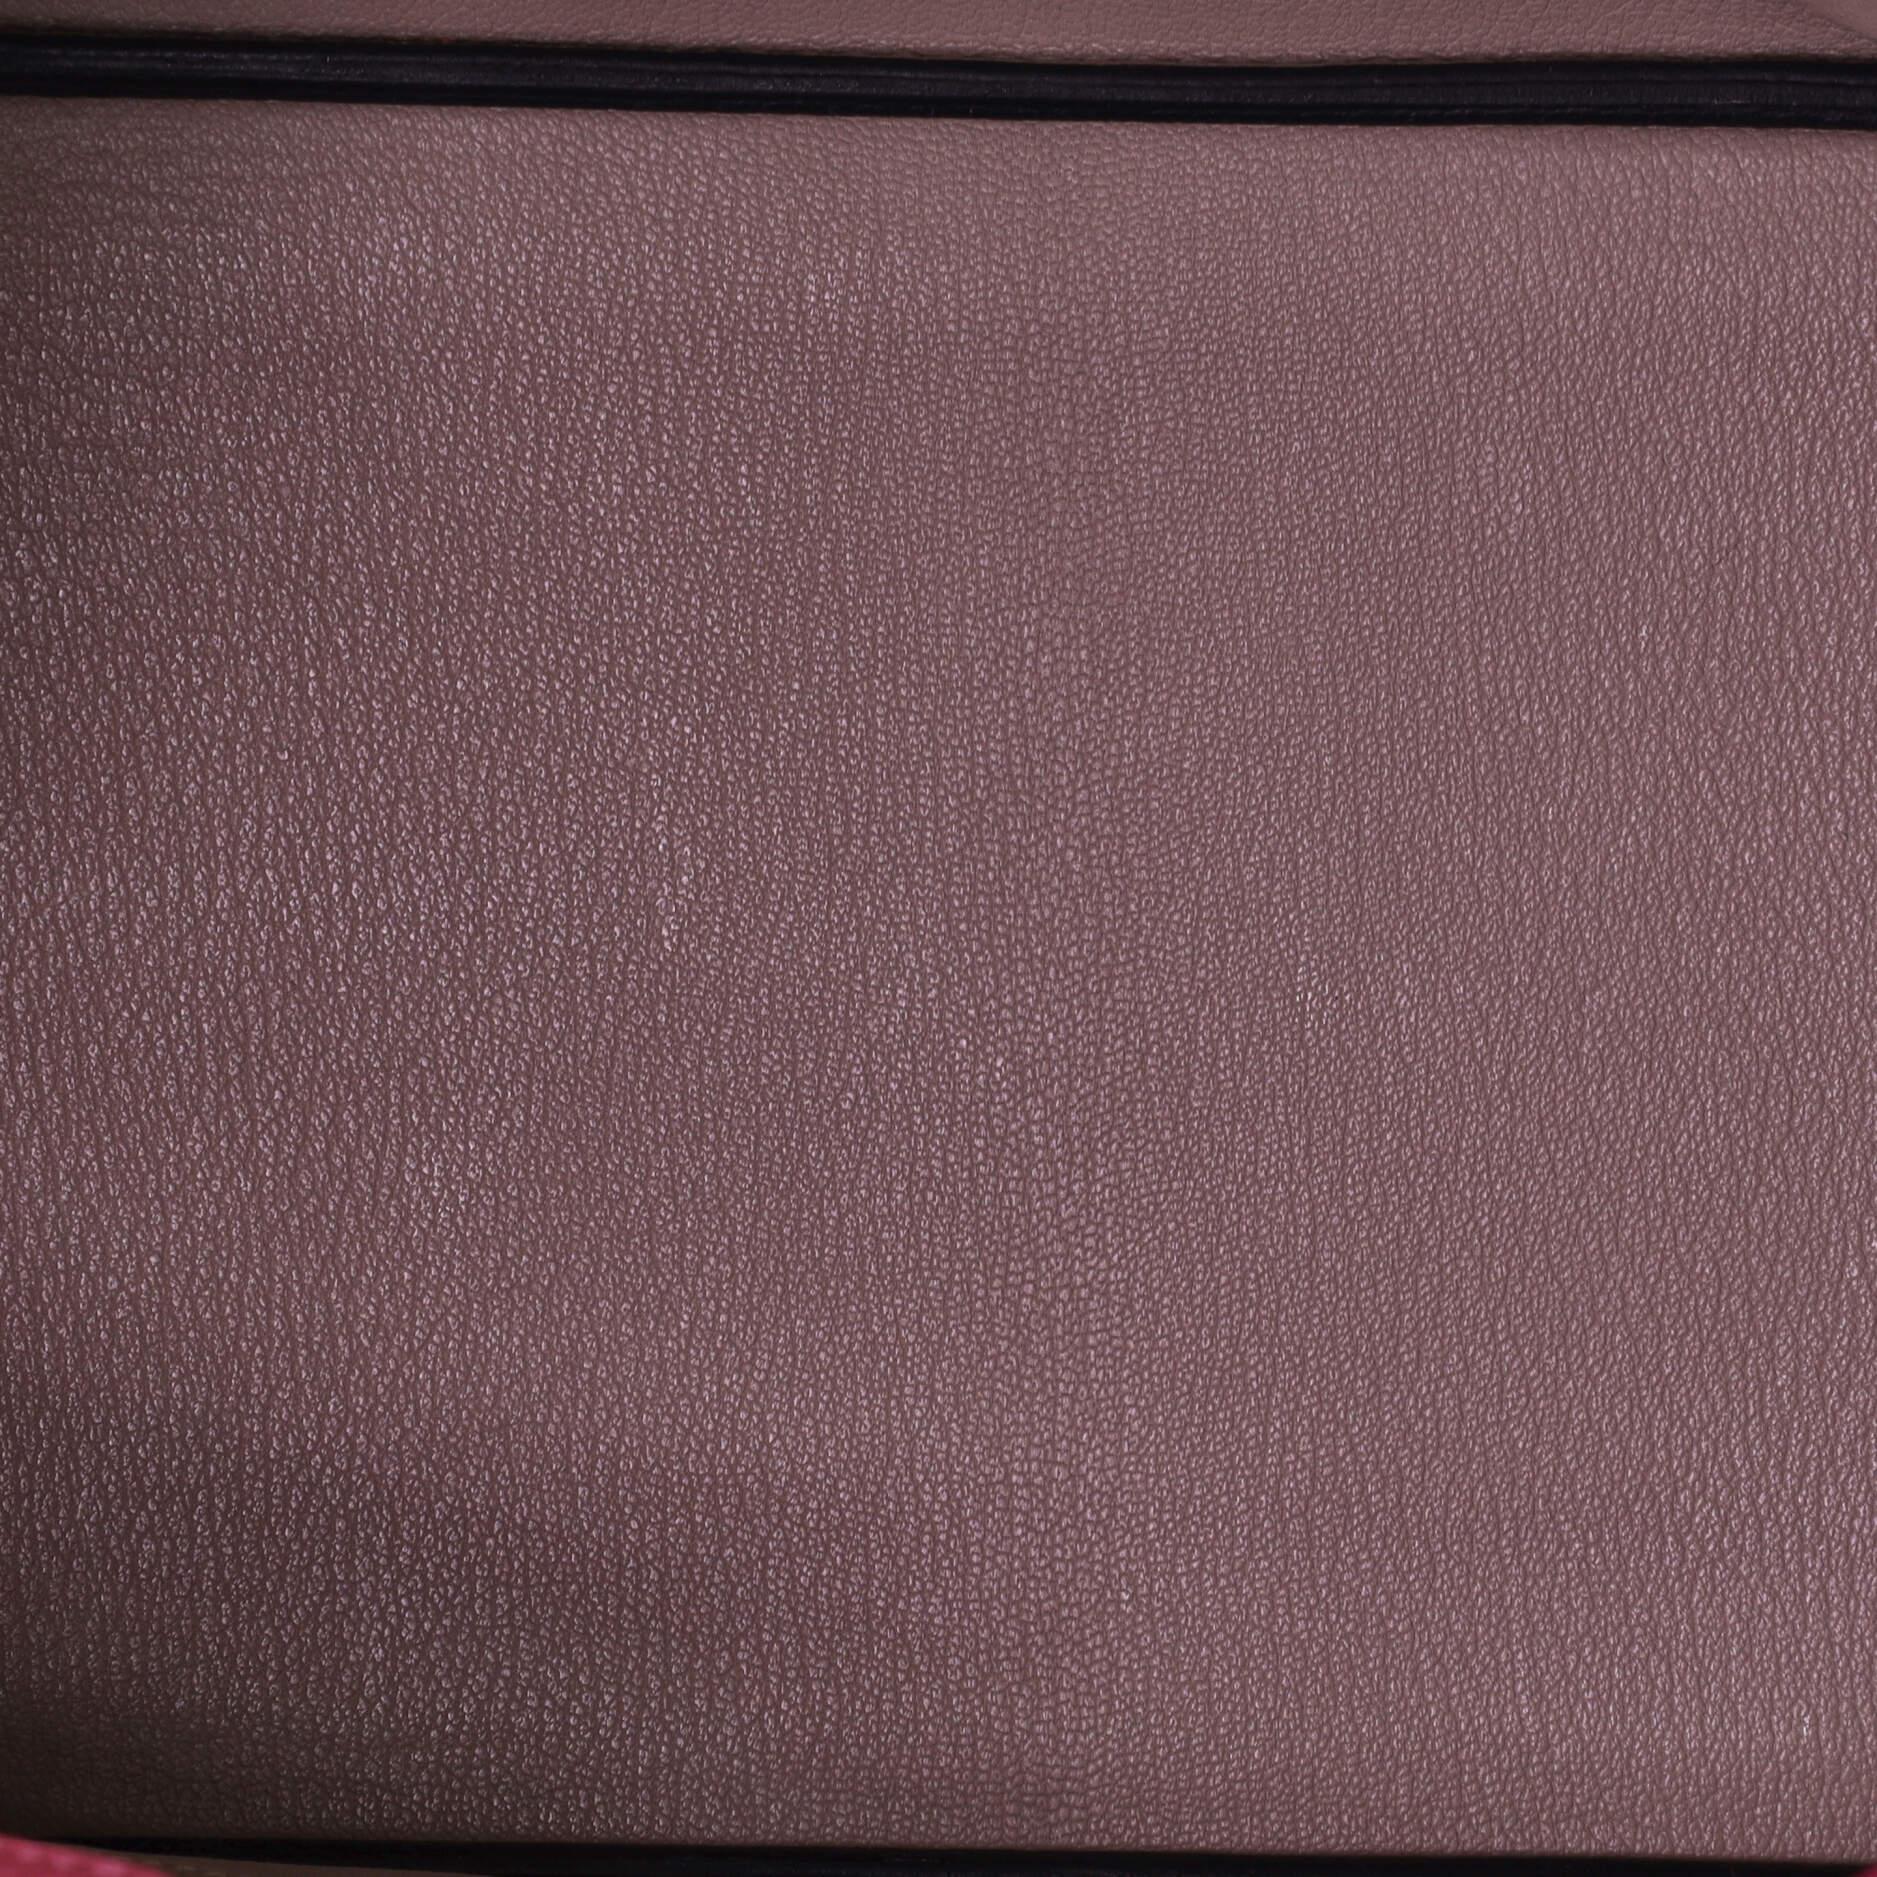 Purple Hermes Birkin Handbag Tricolor Togo with Palladium Hardware 35